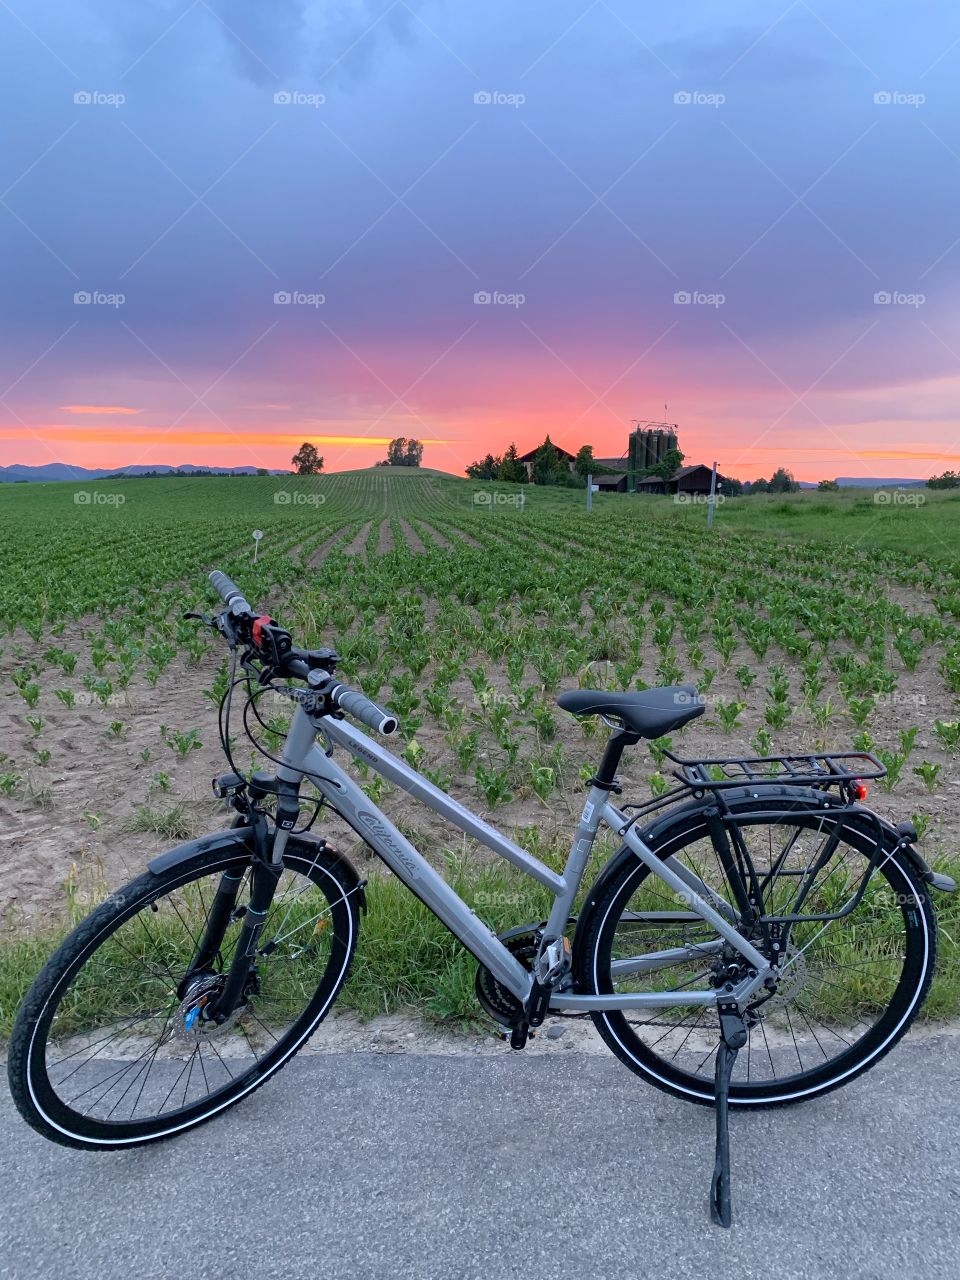 Cycle at sunset 